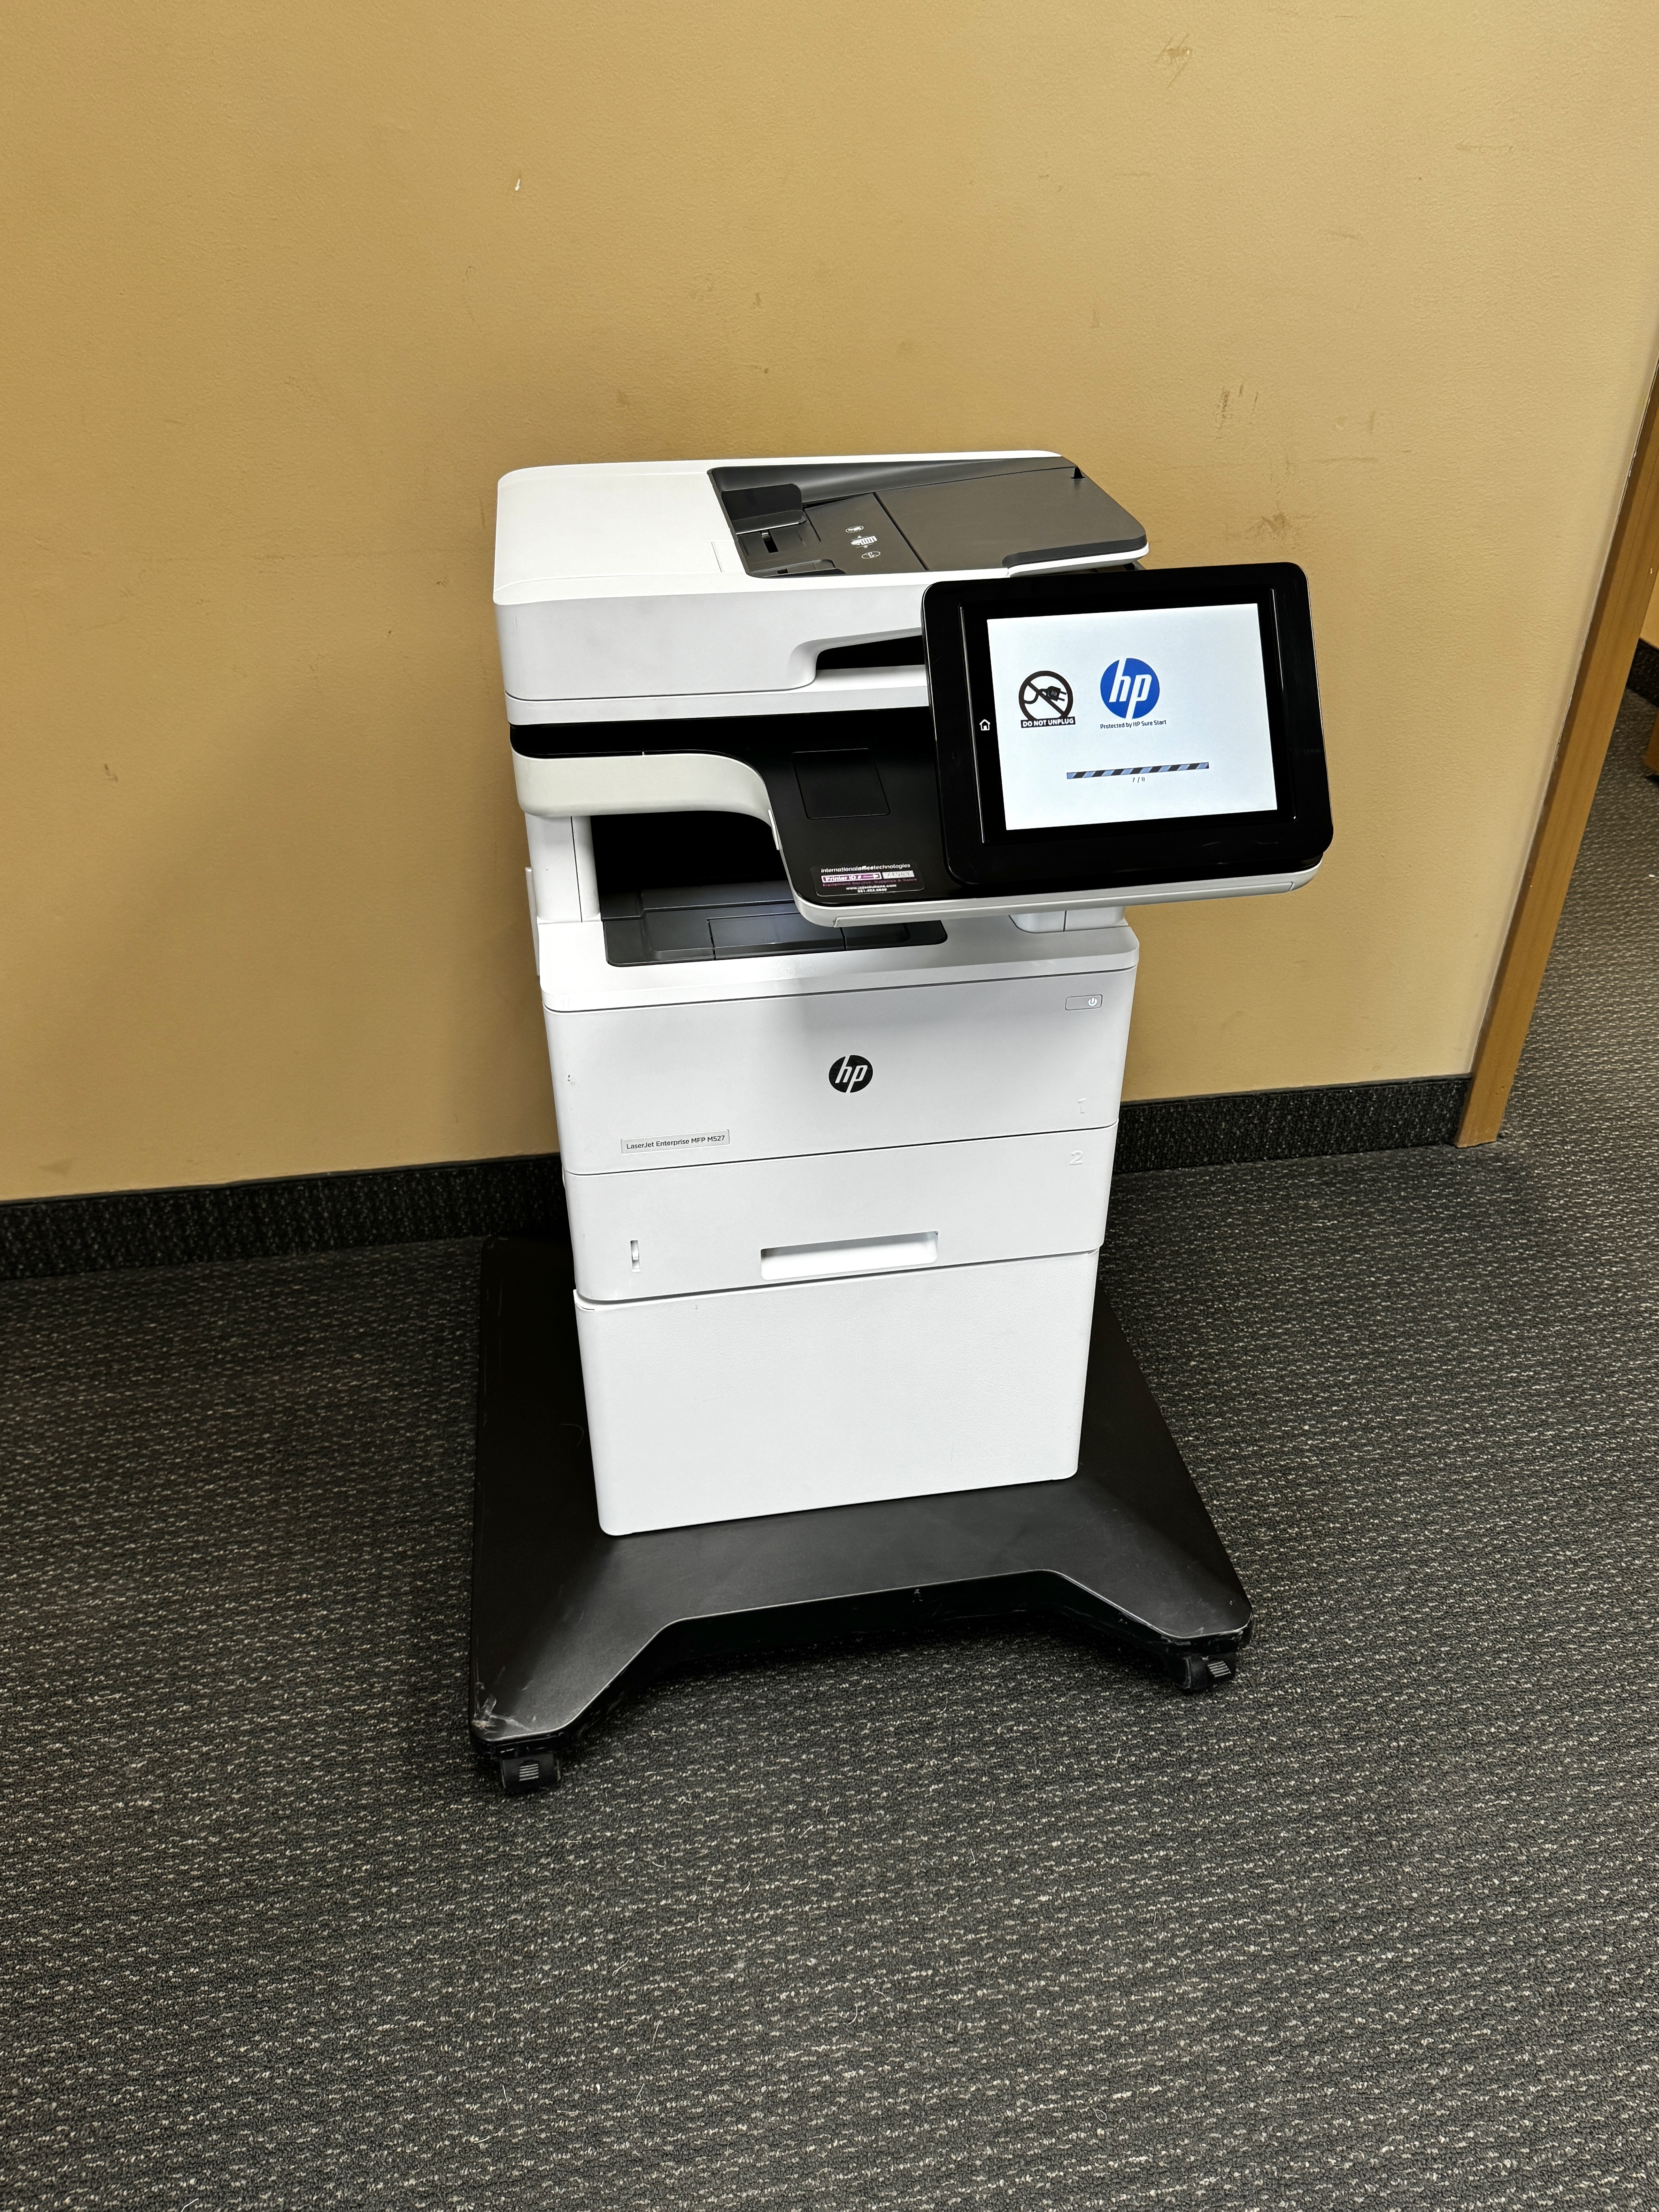 HP M527 commerical printer rental. 